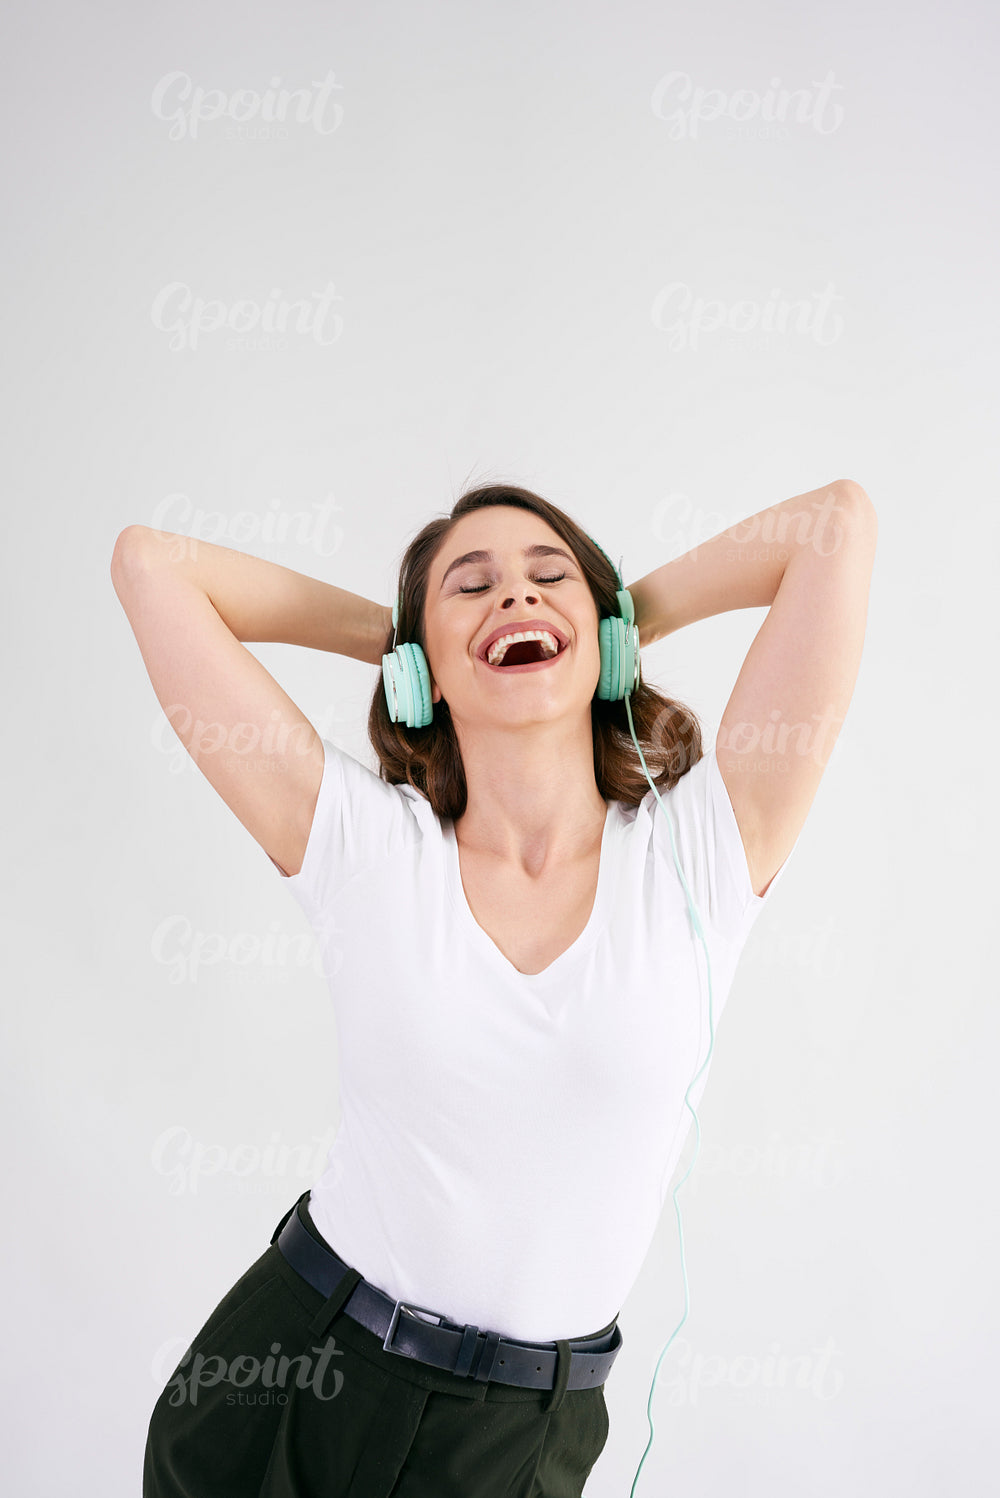 Joyful woman with headphones listening to music in studio shot